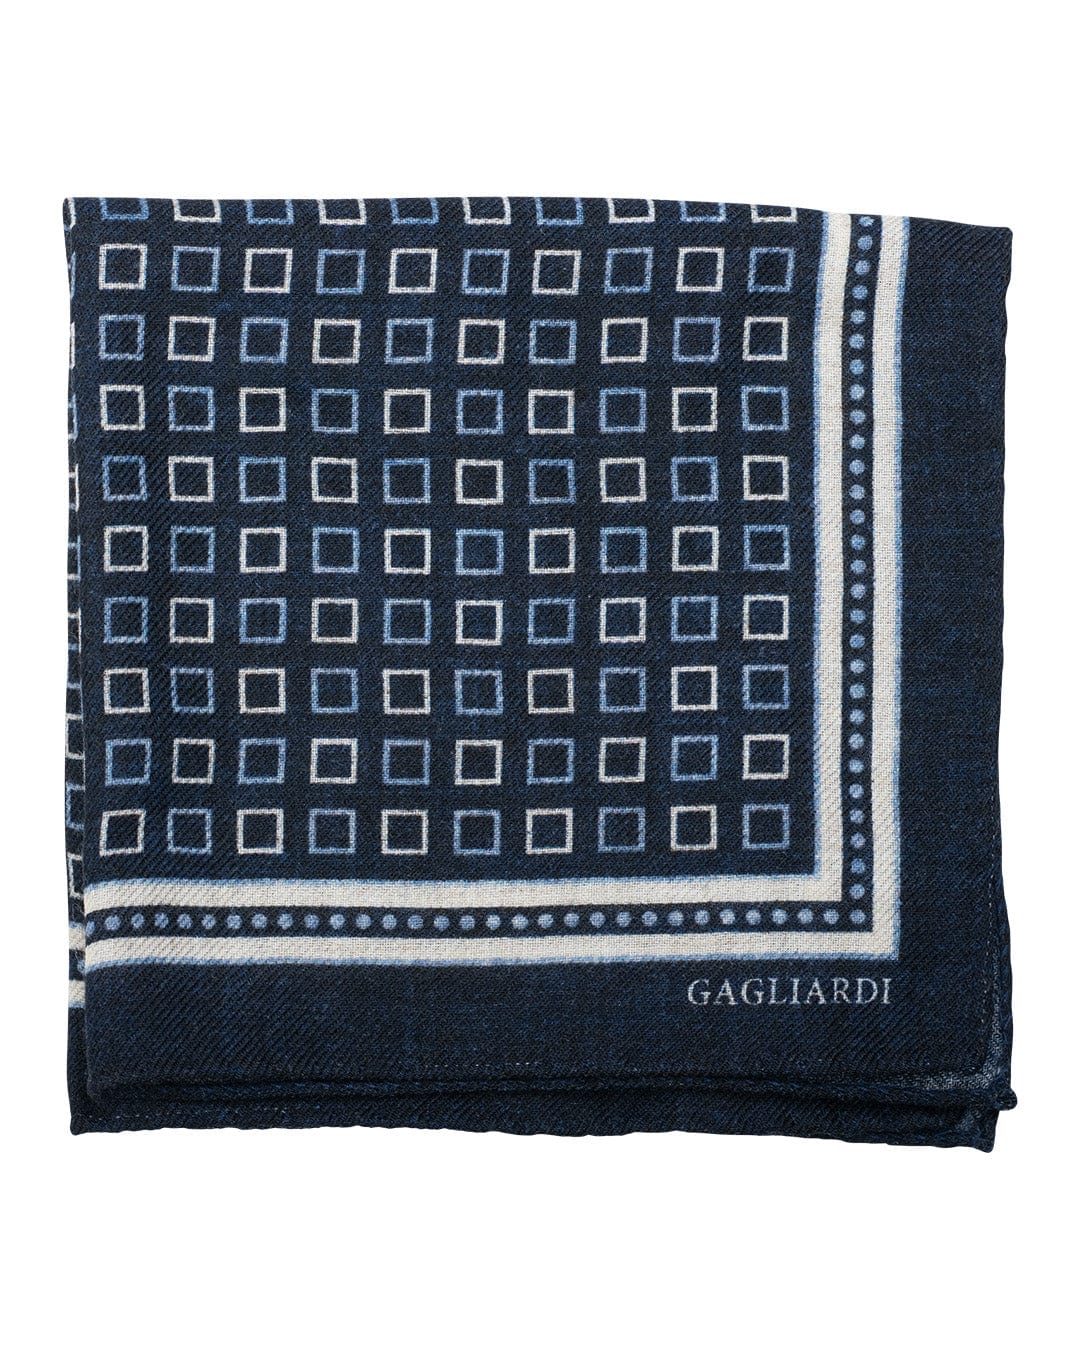 Gagliardi Pocket Squares ONE Gagliardi Navy Squares Print Italian Wool Flannel Pocket Square